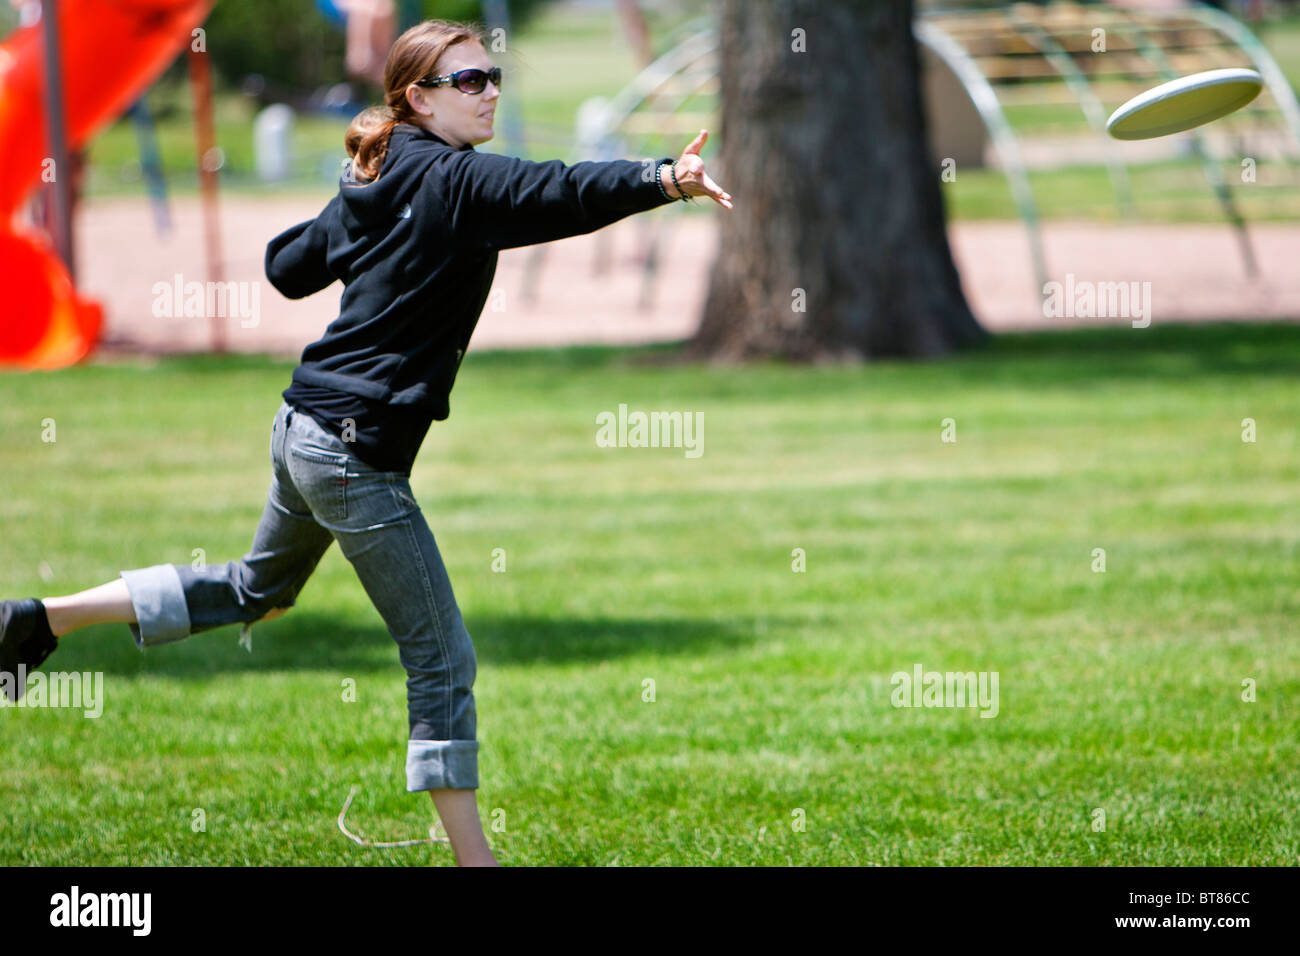 A woman throws a frisbee in Kimball, Nebraska, USA, June 6, 2007. Stock Photo